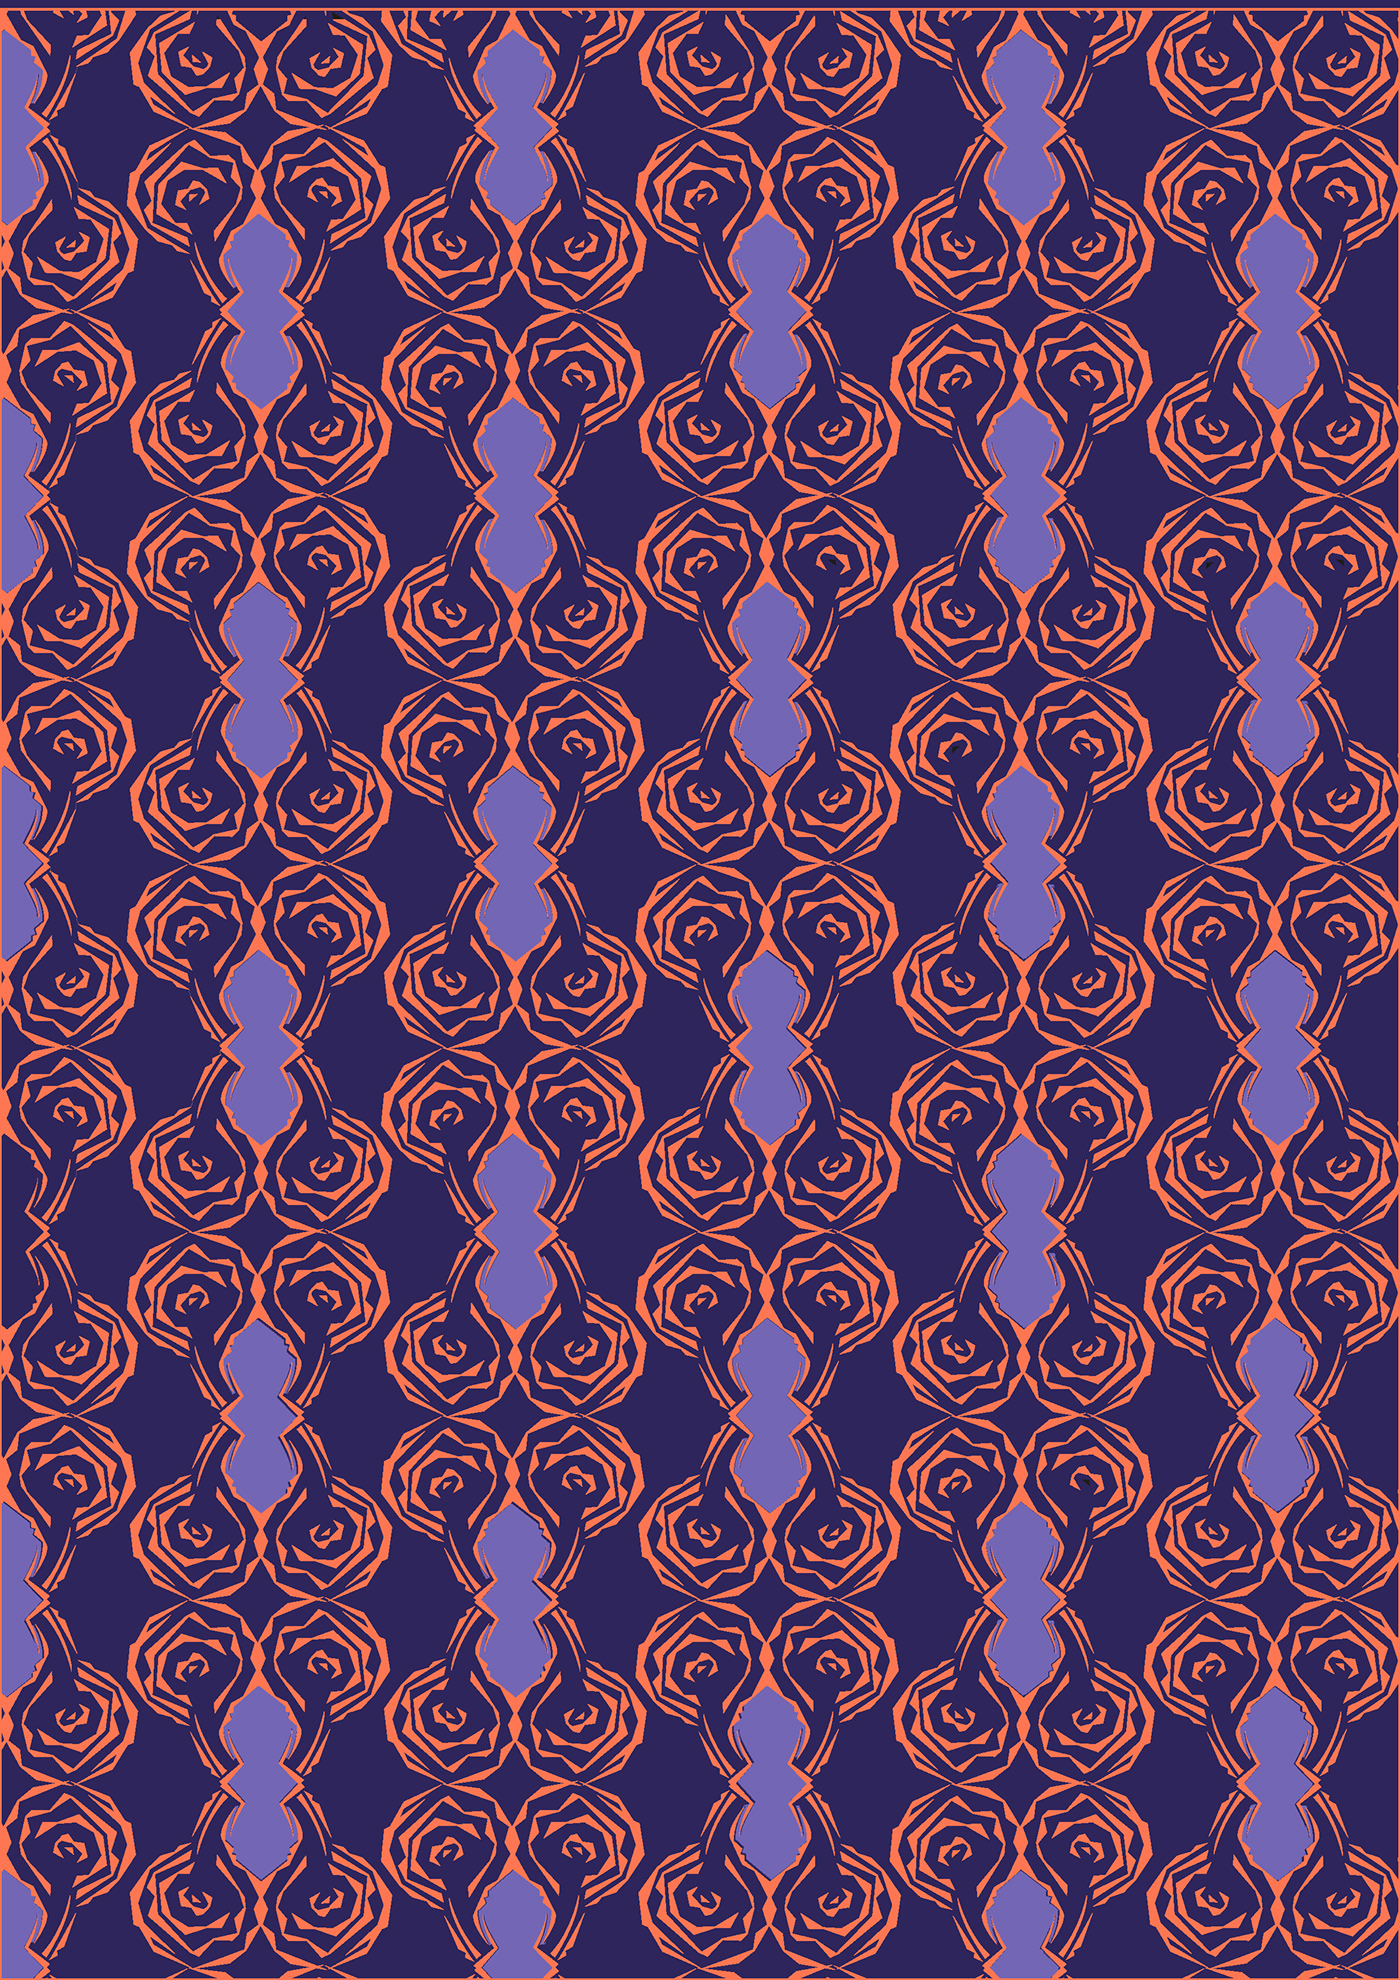 patterndesign